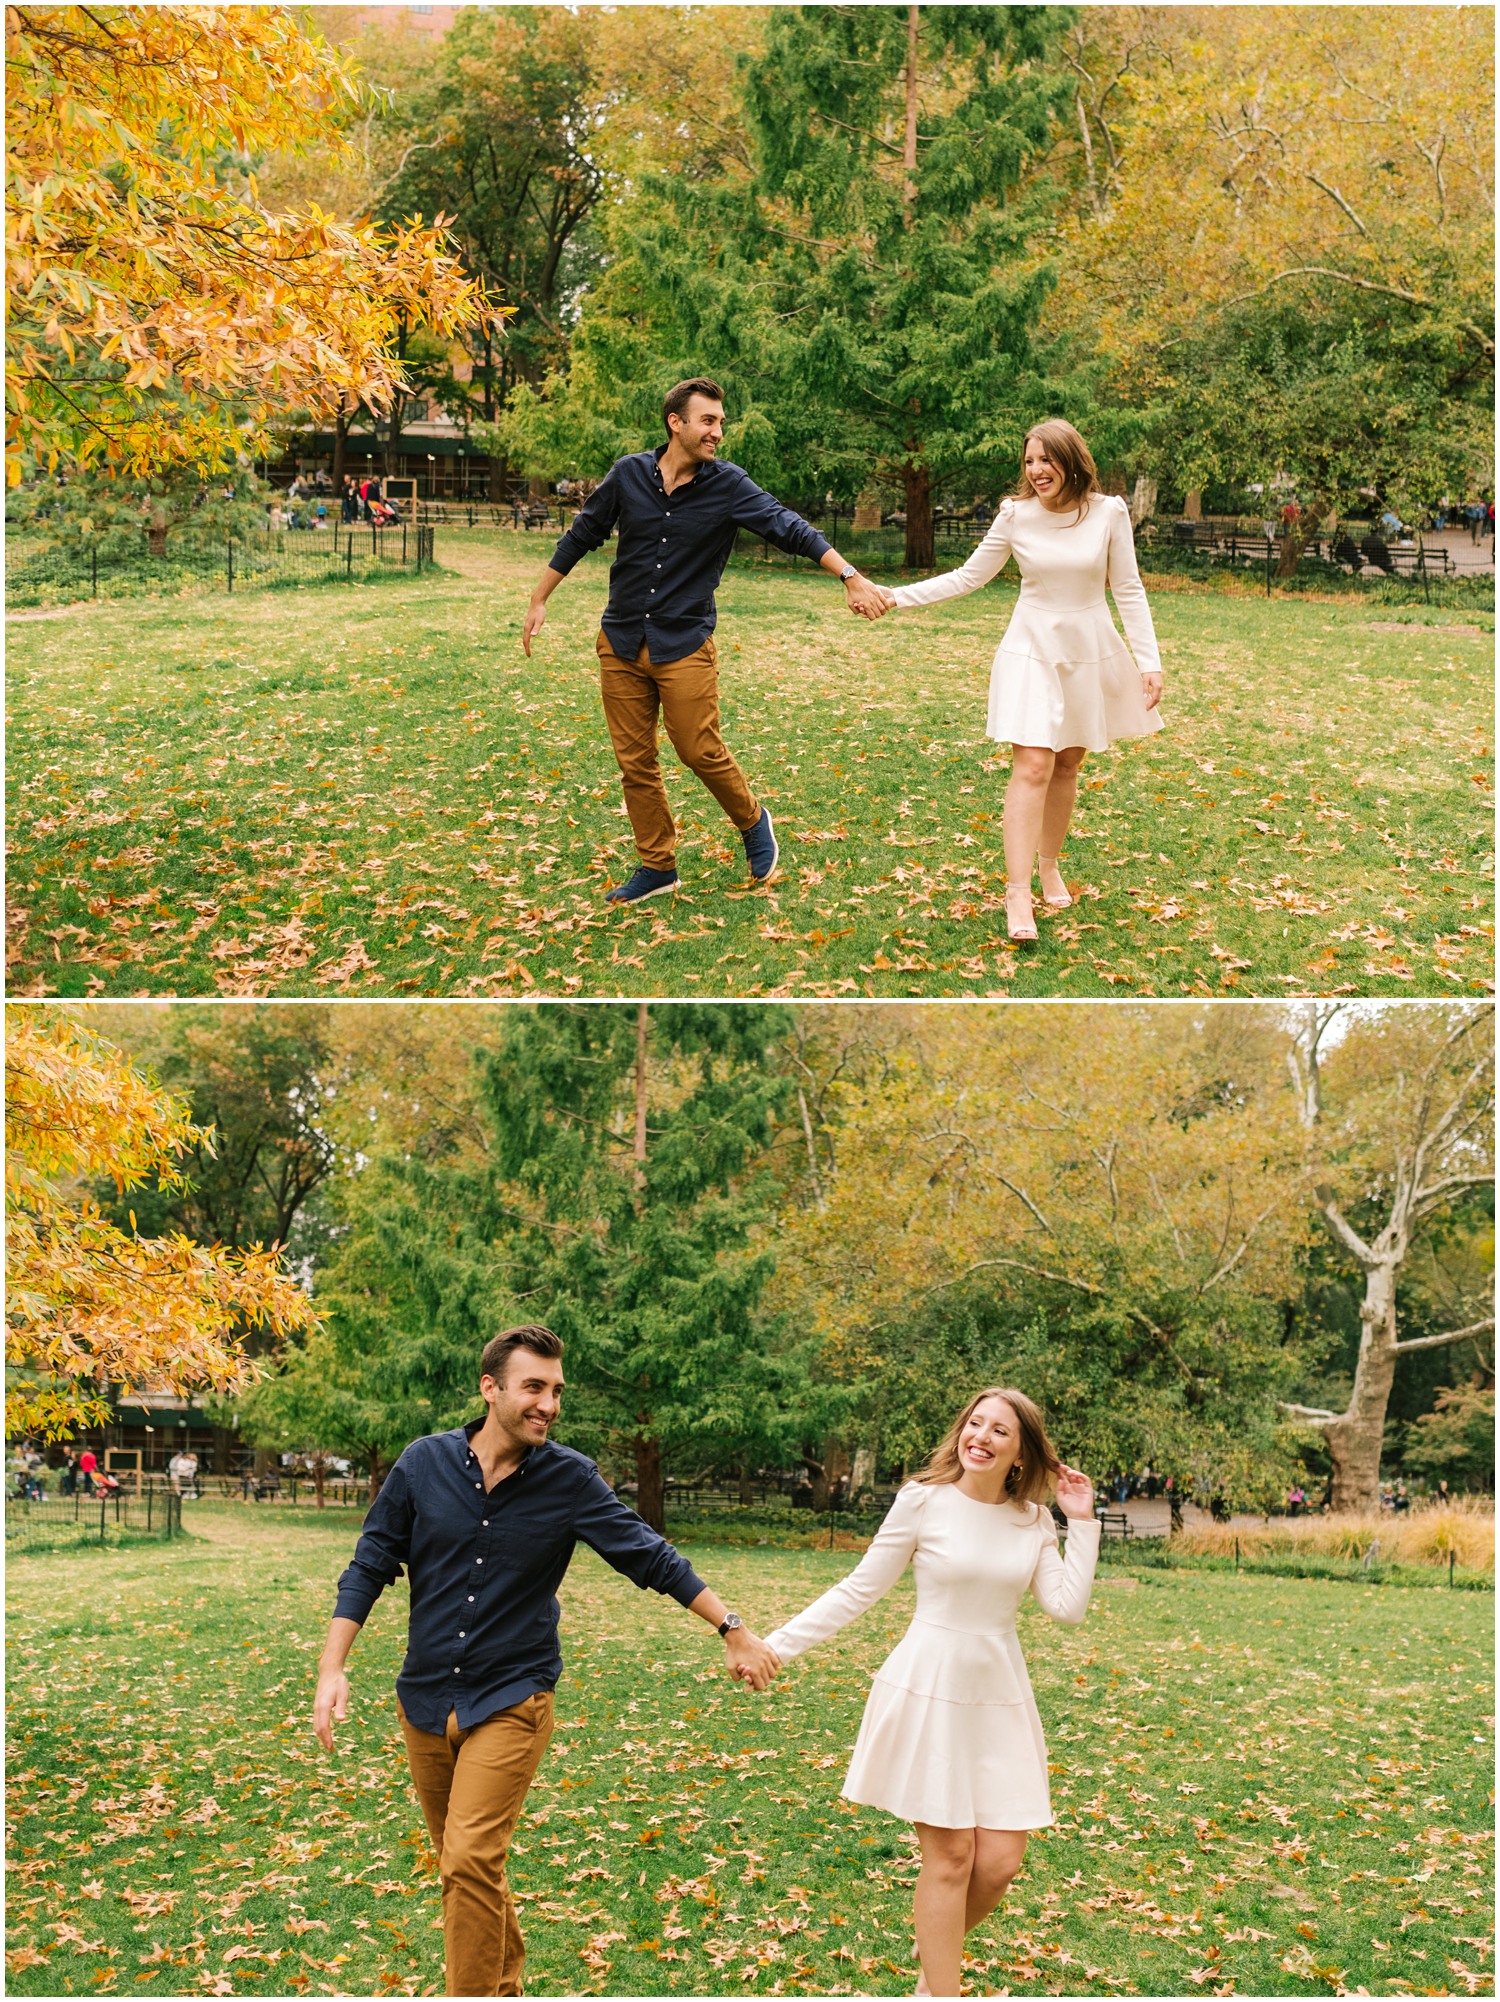 New York City couple dances during engagement photos in Washington Square